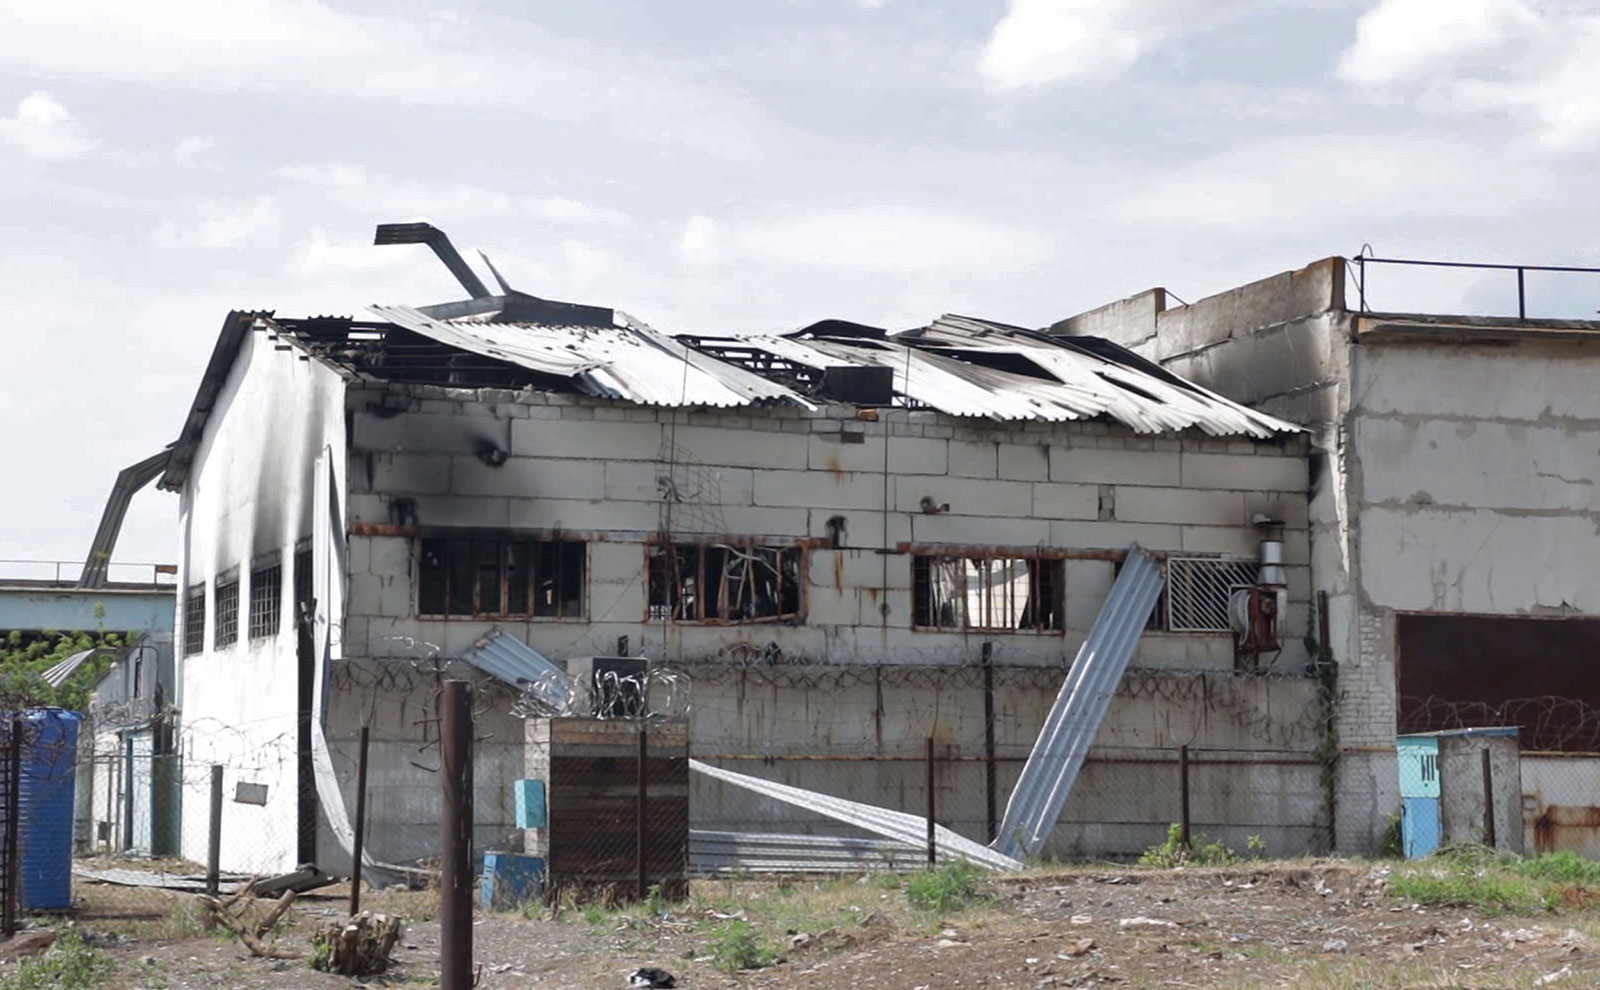 A destroyed barrack is seen at a prison in Olenivka, Ukraine, on July 29. 